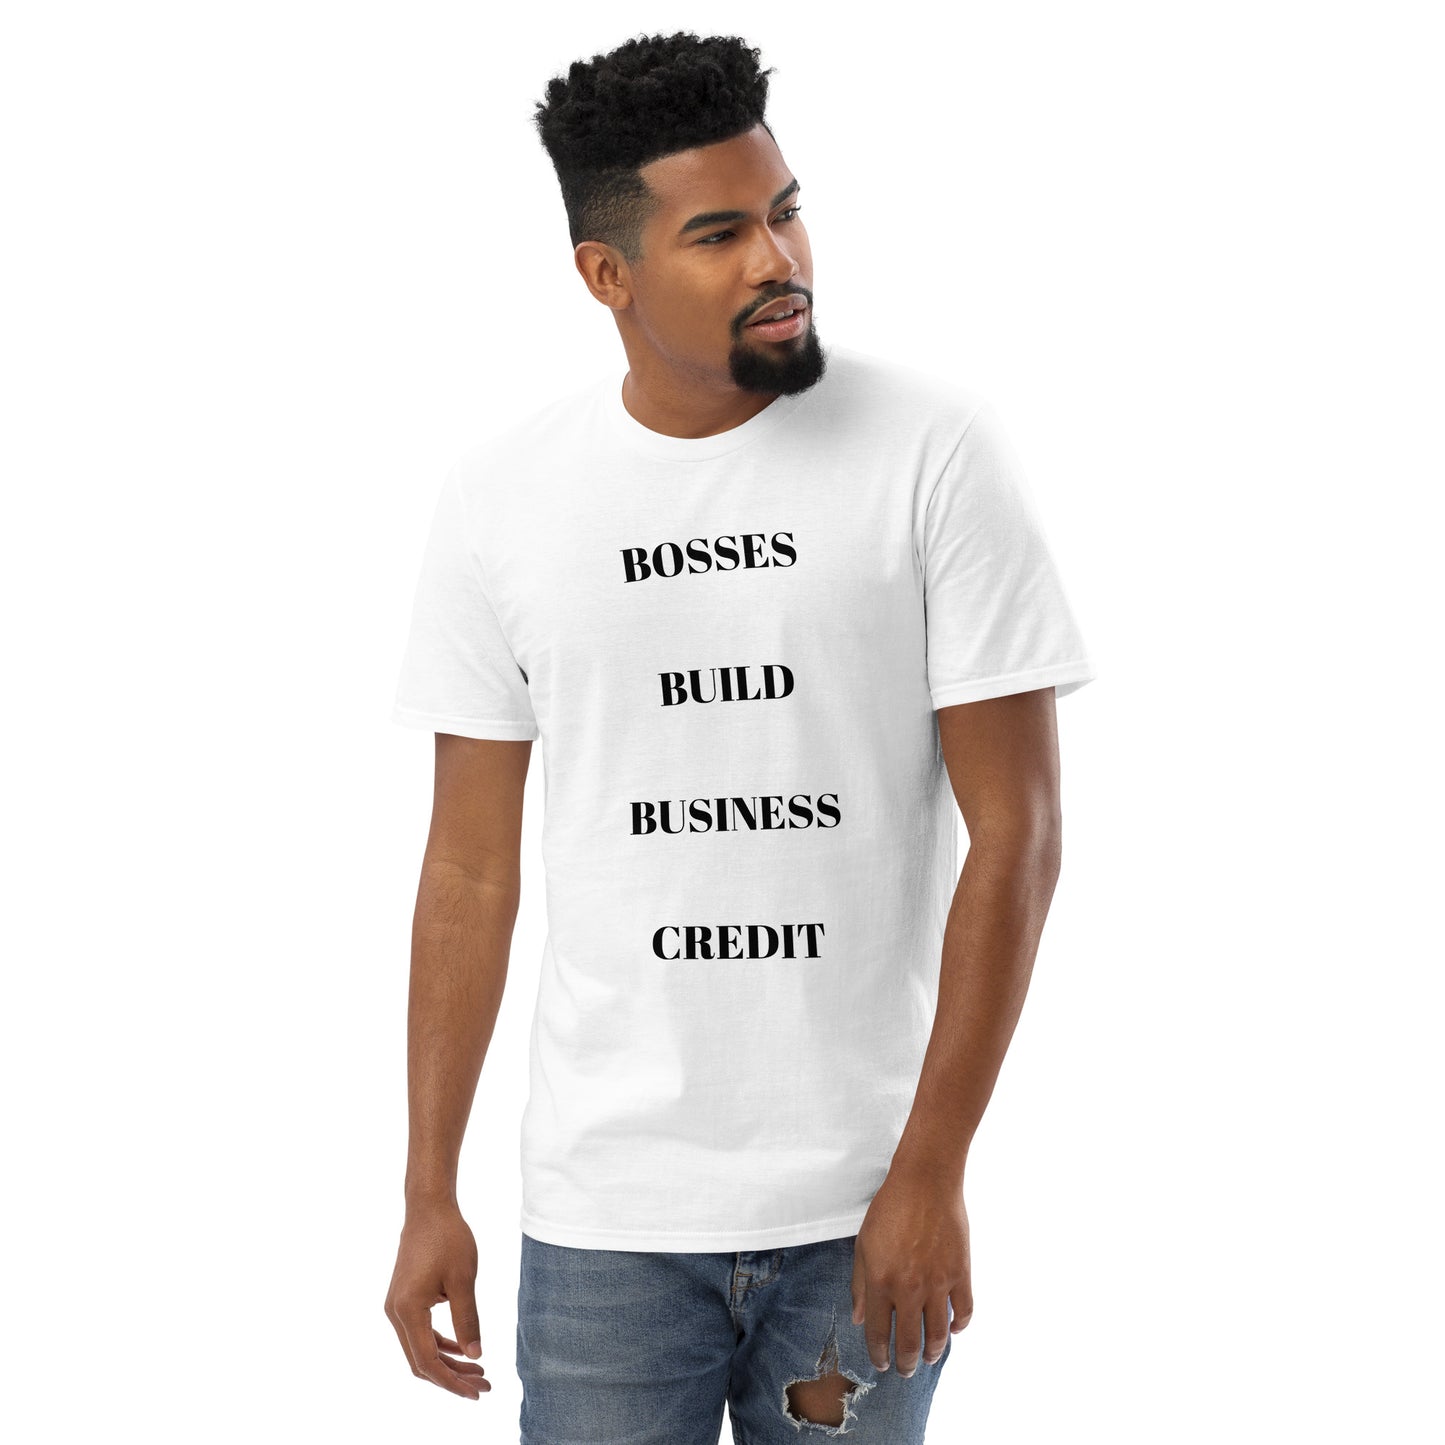 Bosses Build Business Credit Short-Sleeve T-Shirt